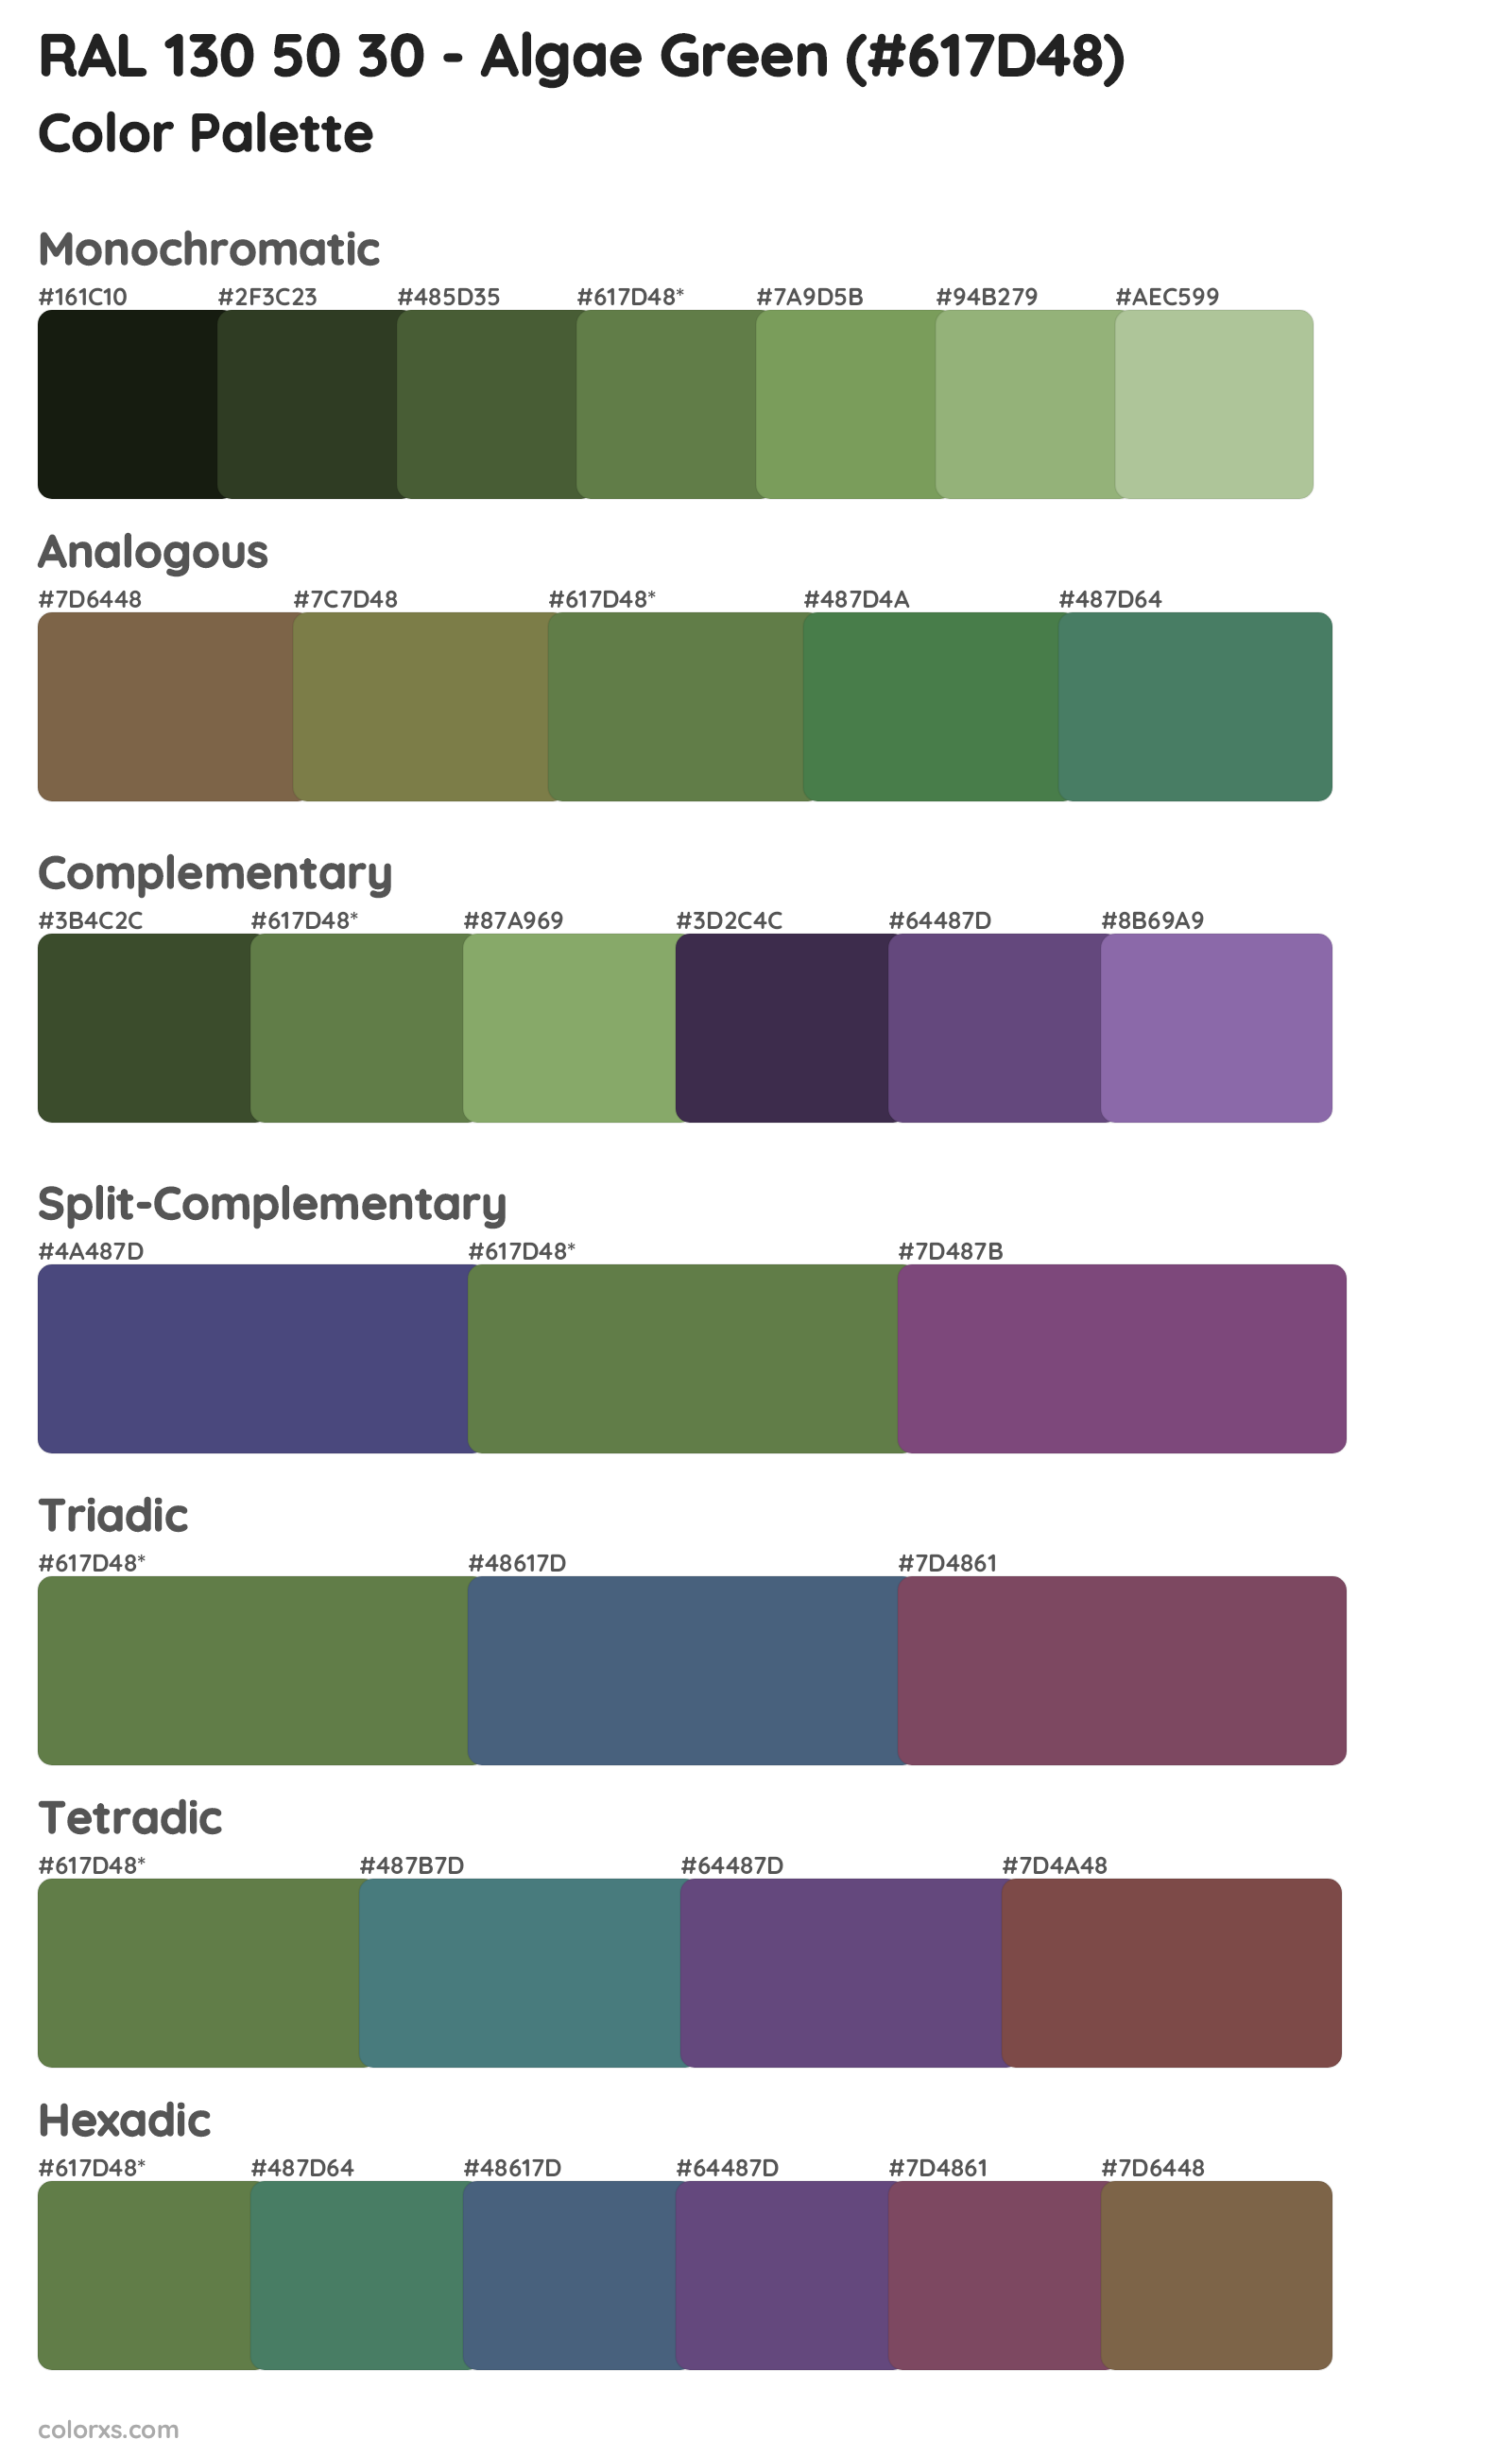 RAL 130 50 30 - Algae Green Color Scheme Palettes